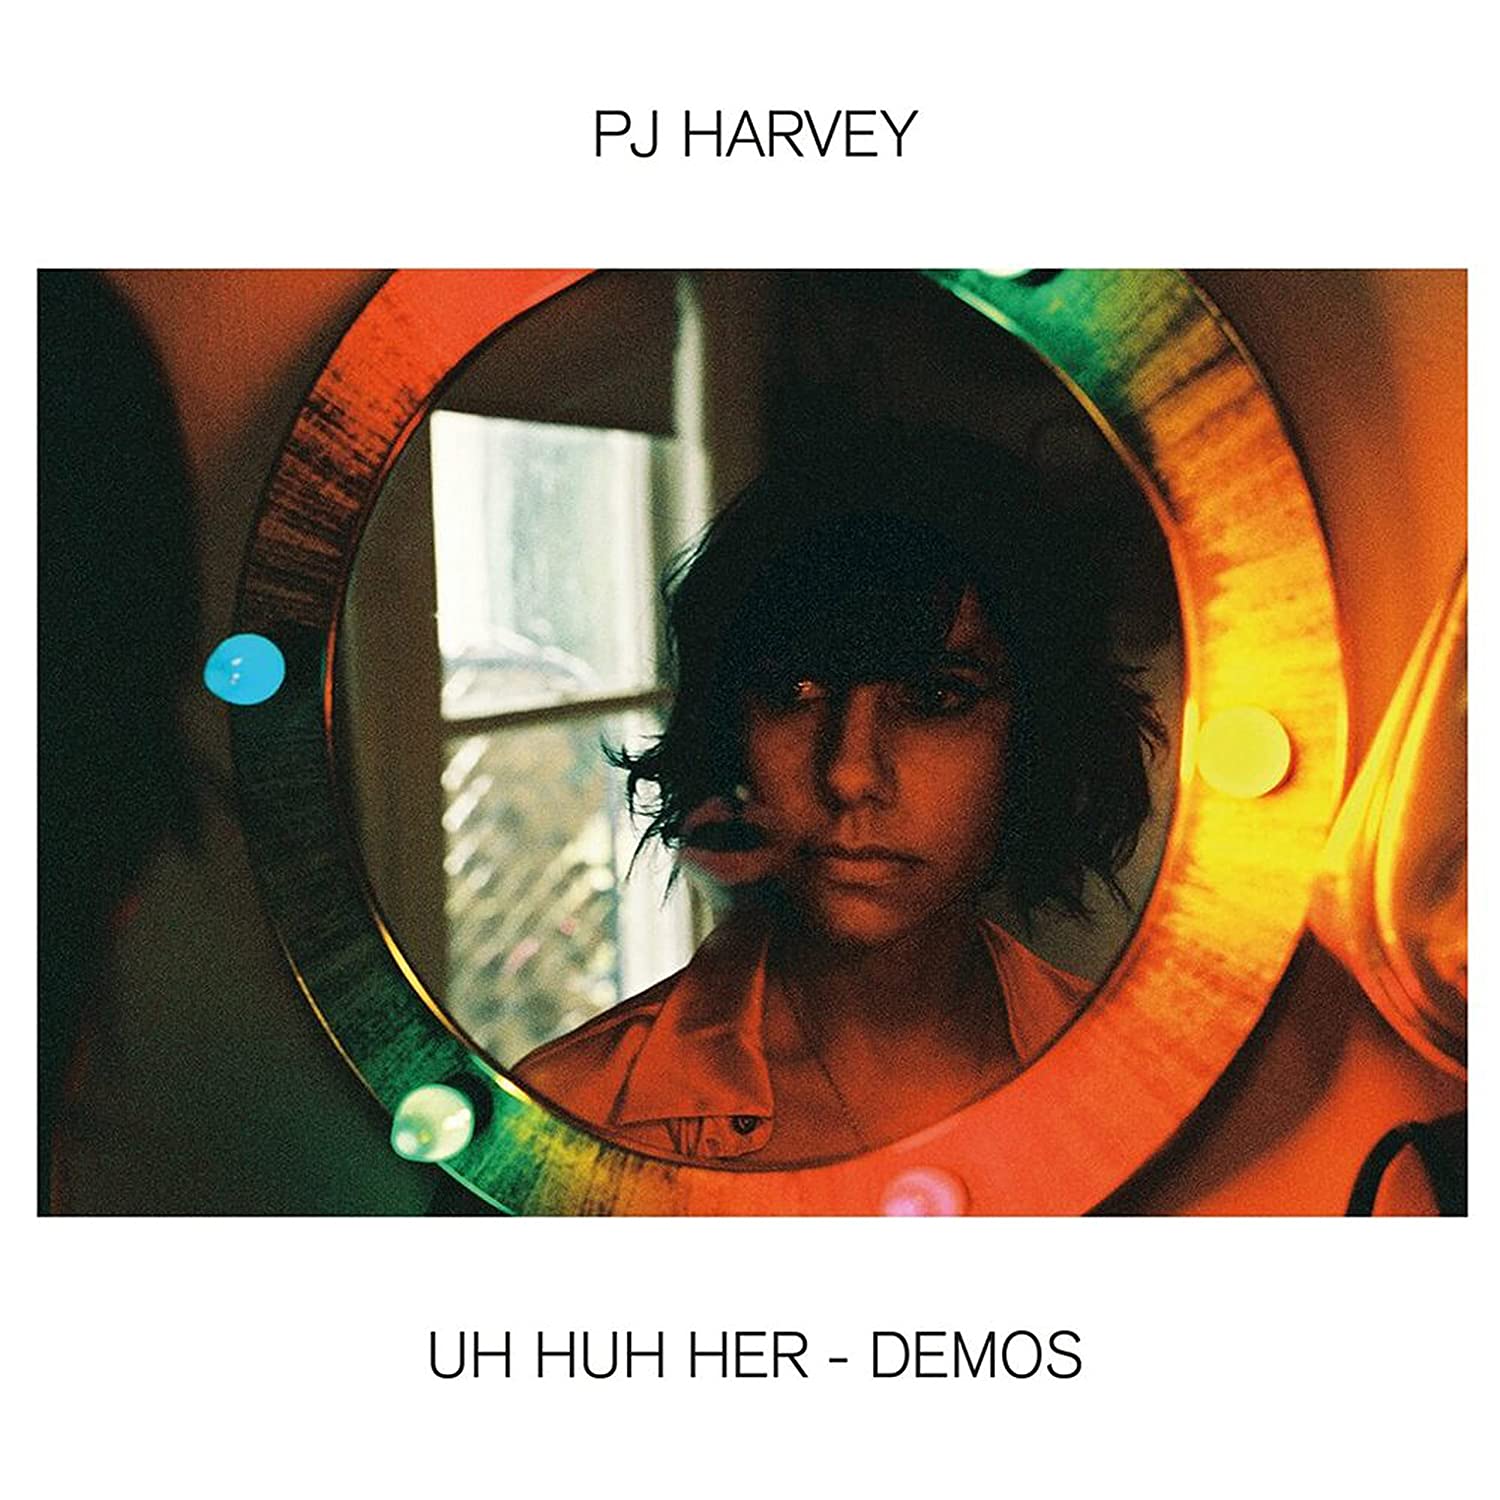 PJ HARVEY - UH HUH HER DEMOS Vinyl LP